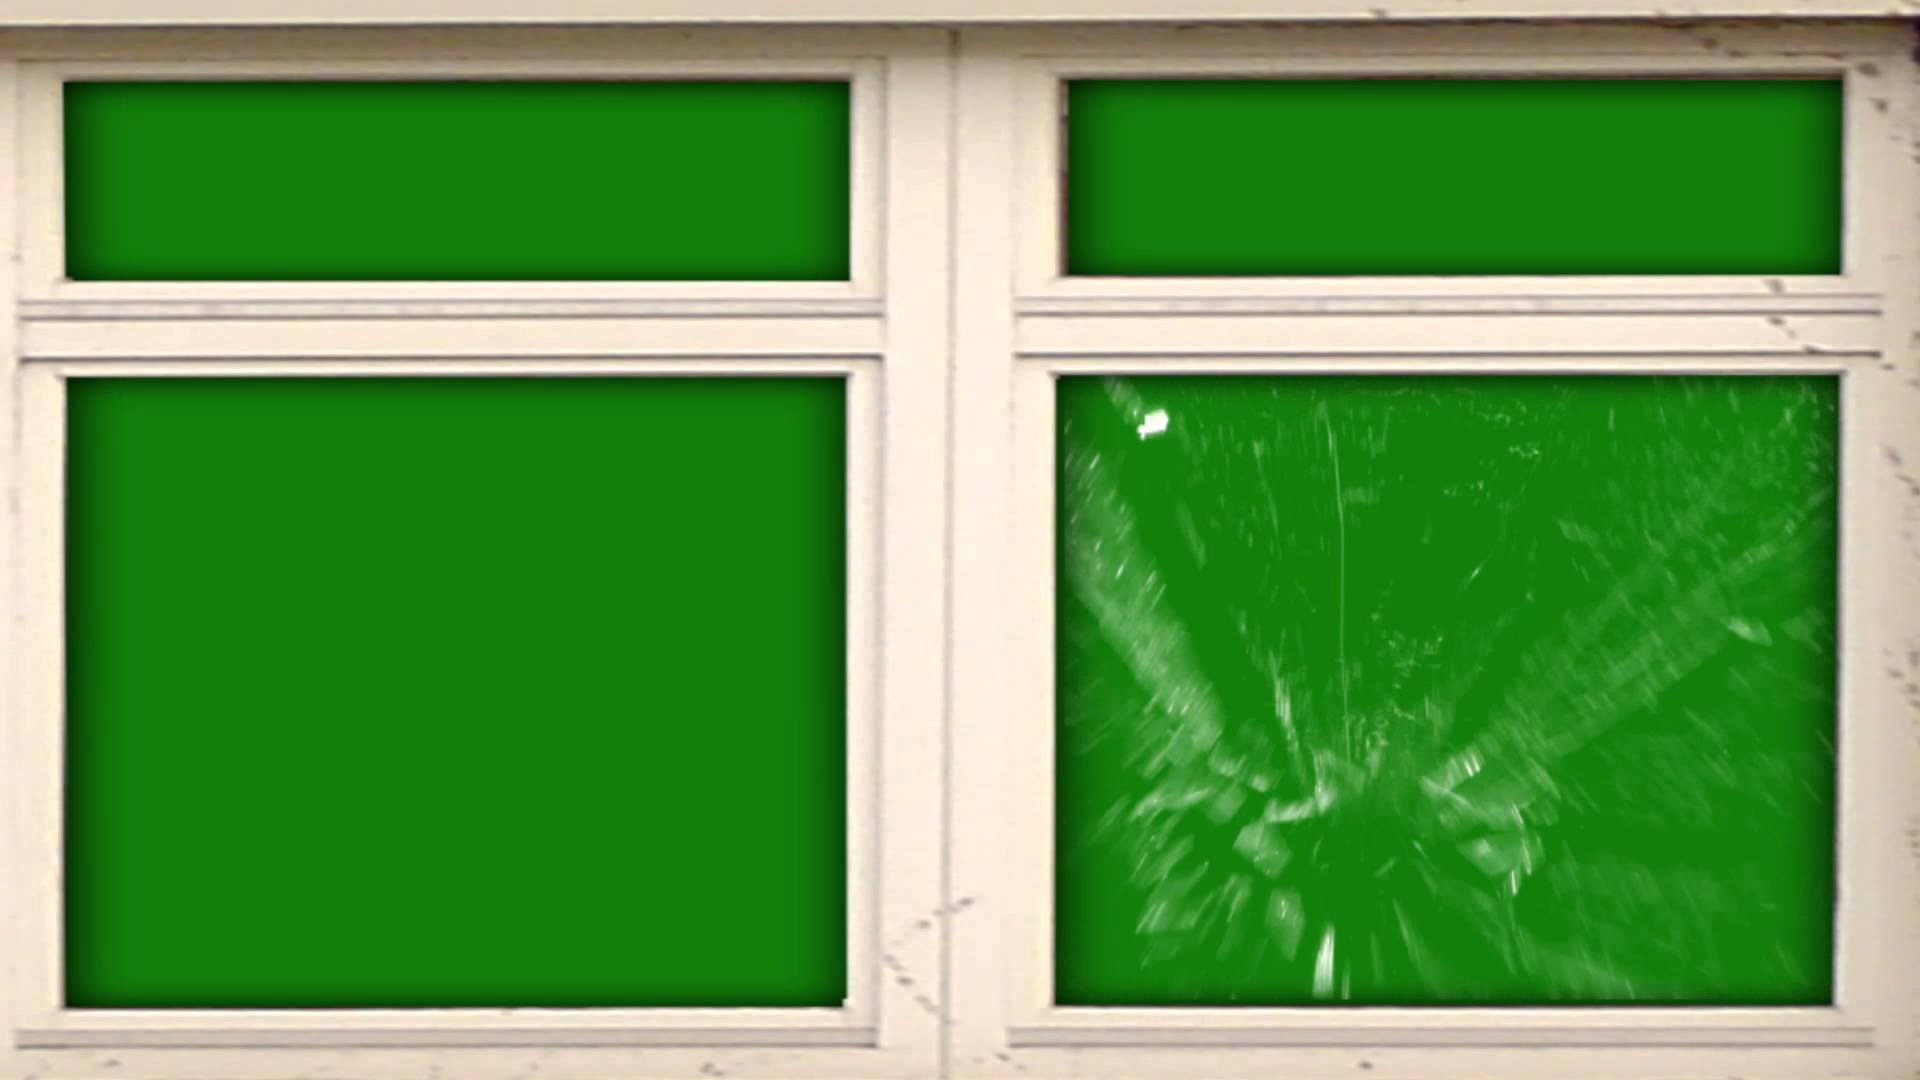 window glass shatters - green screen effect - YouTube